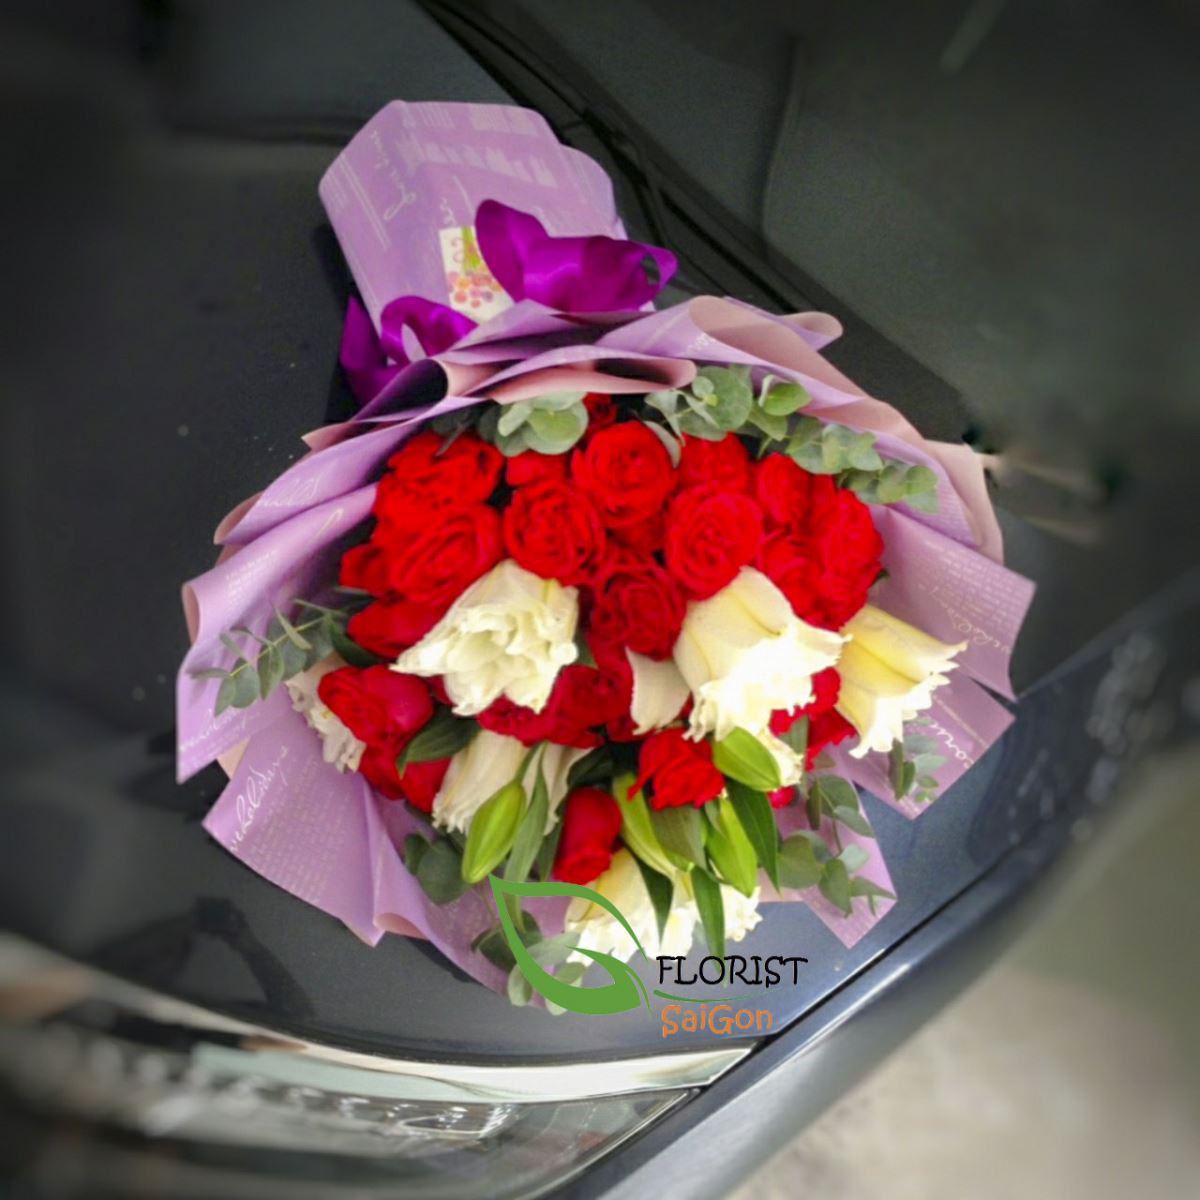 Thank you flower bouquet Saigon